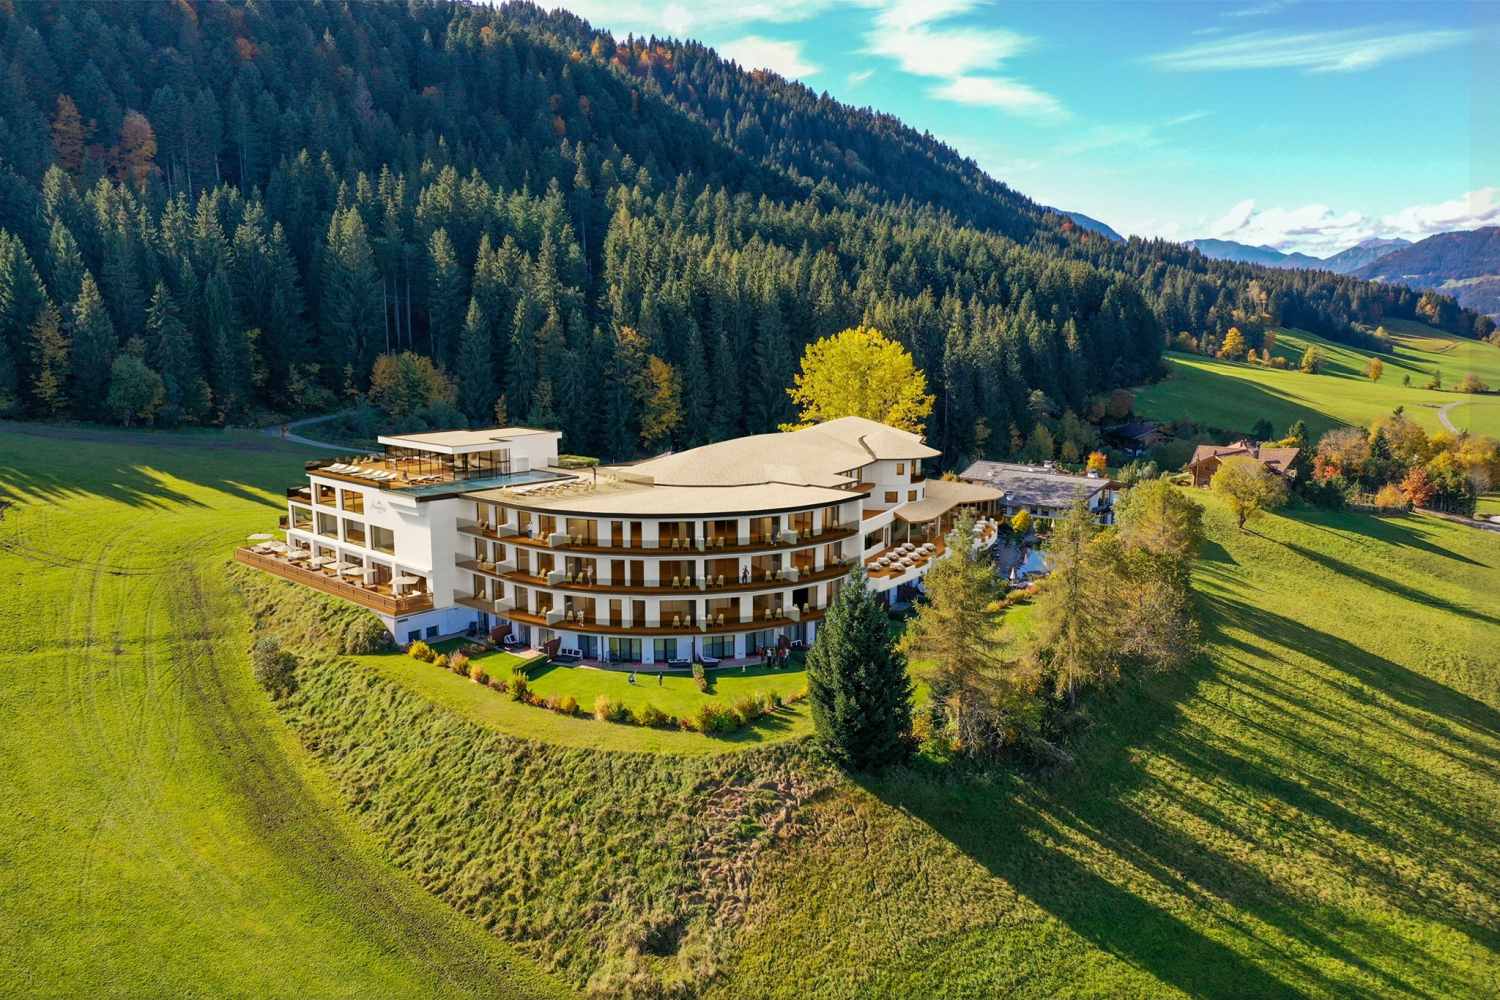 Kaiserhof Ellmau, Tyrol - Austria